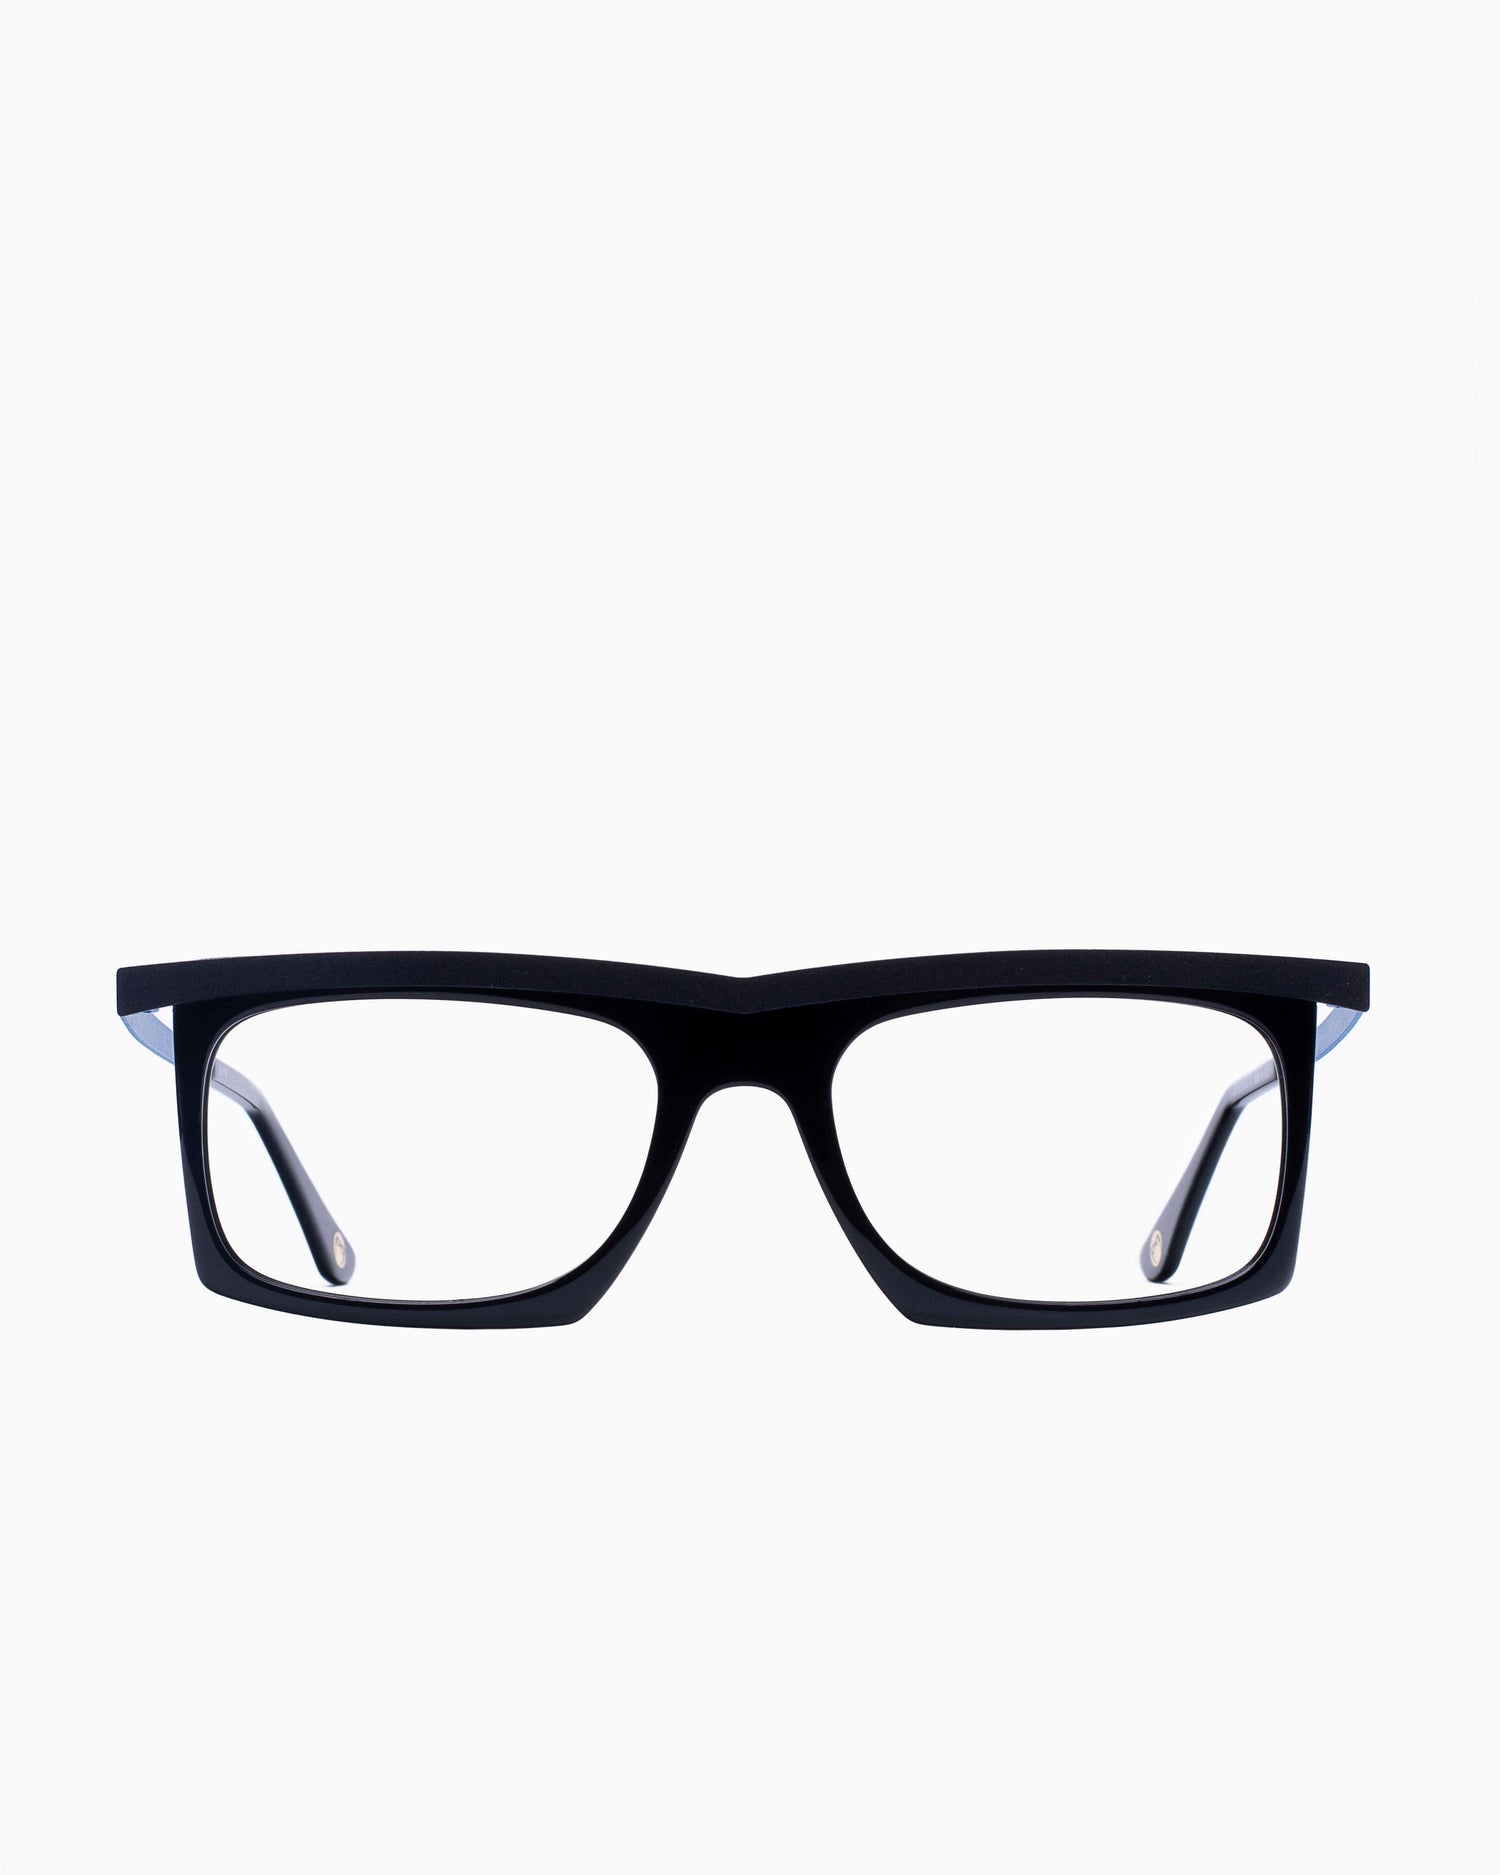 Spectacleeyeworks - Doug - C870 | Bar à lunettes:  Marie-Sophie Dion